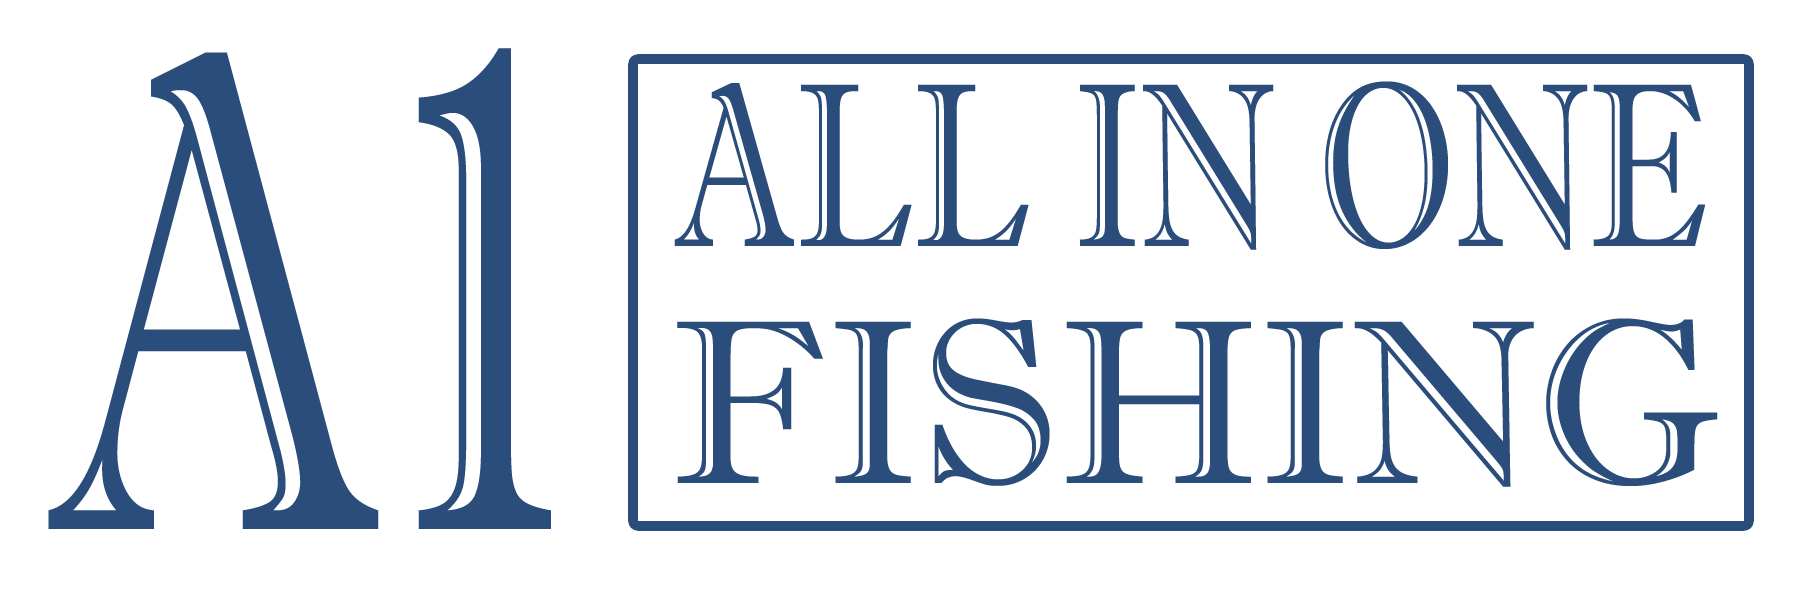 Best Online Fishing Tackle Classified Ads - Allinonefishingstore